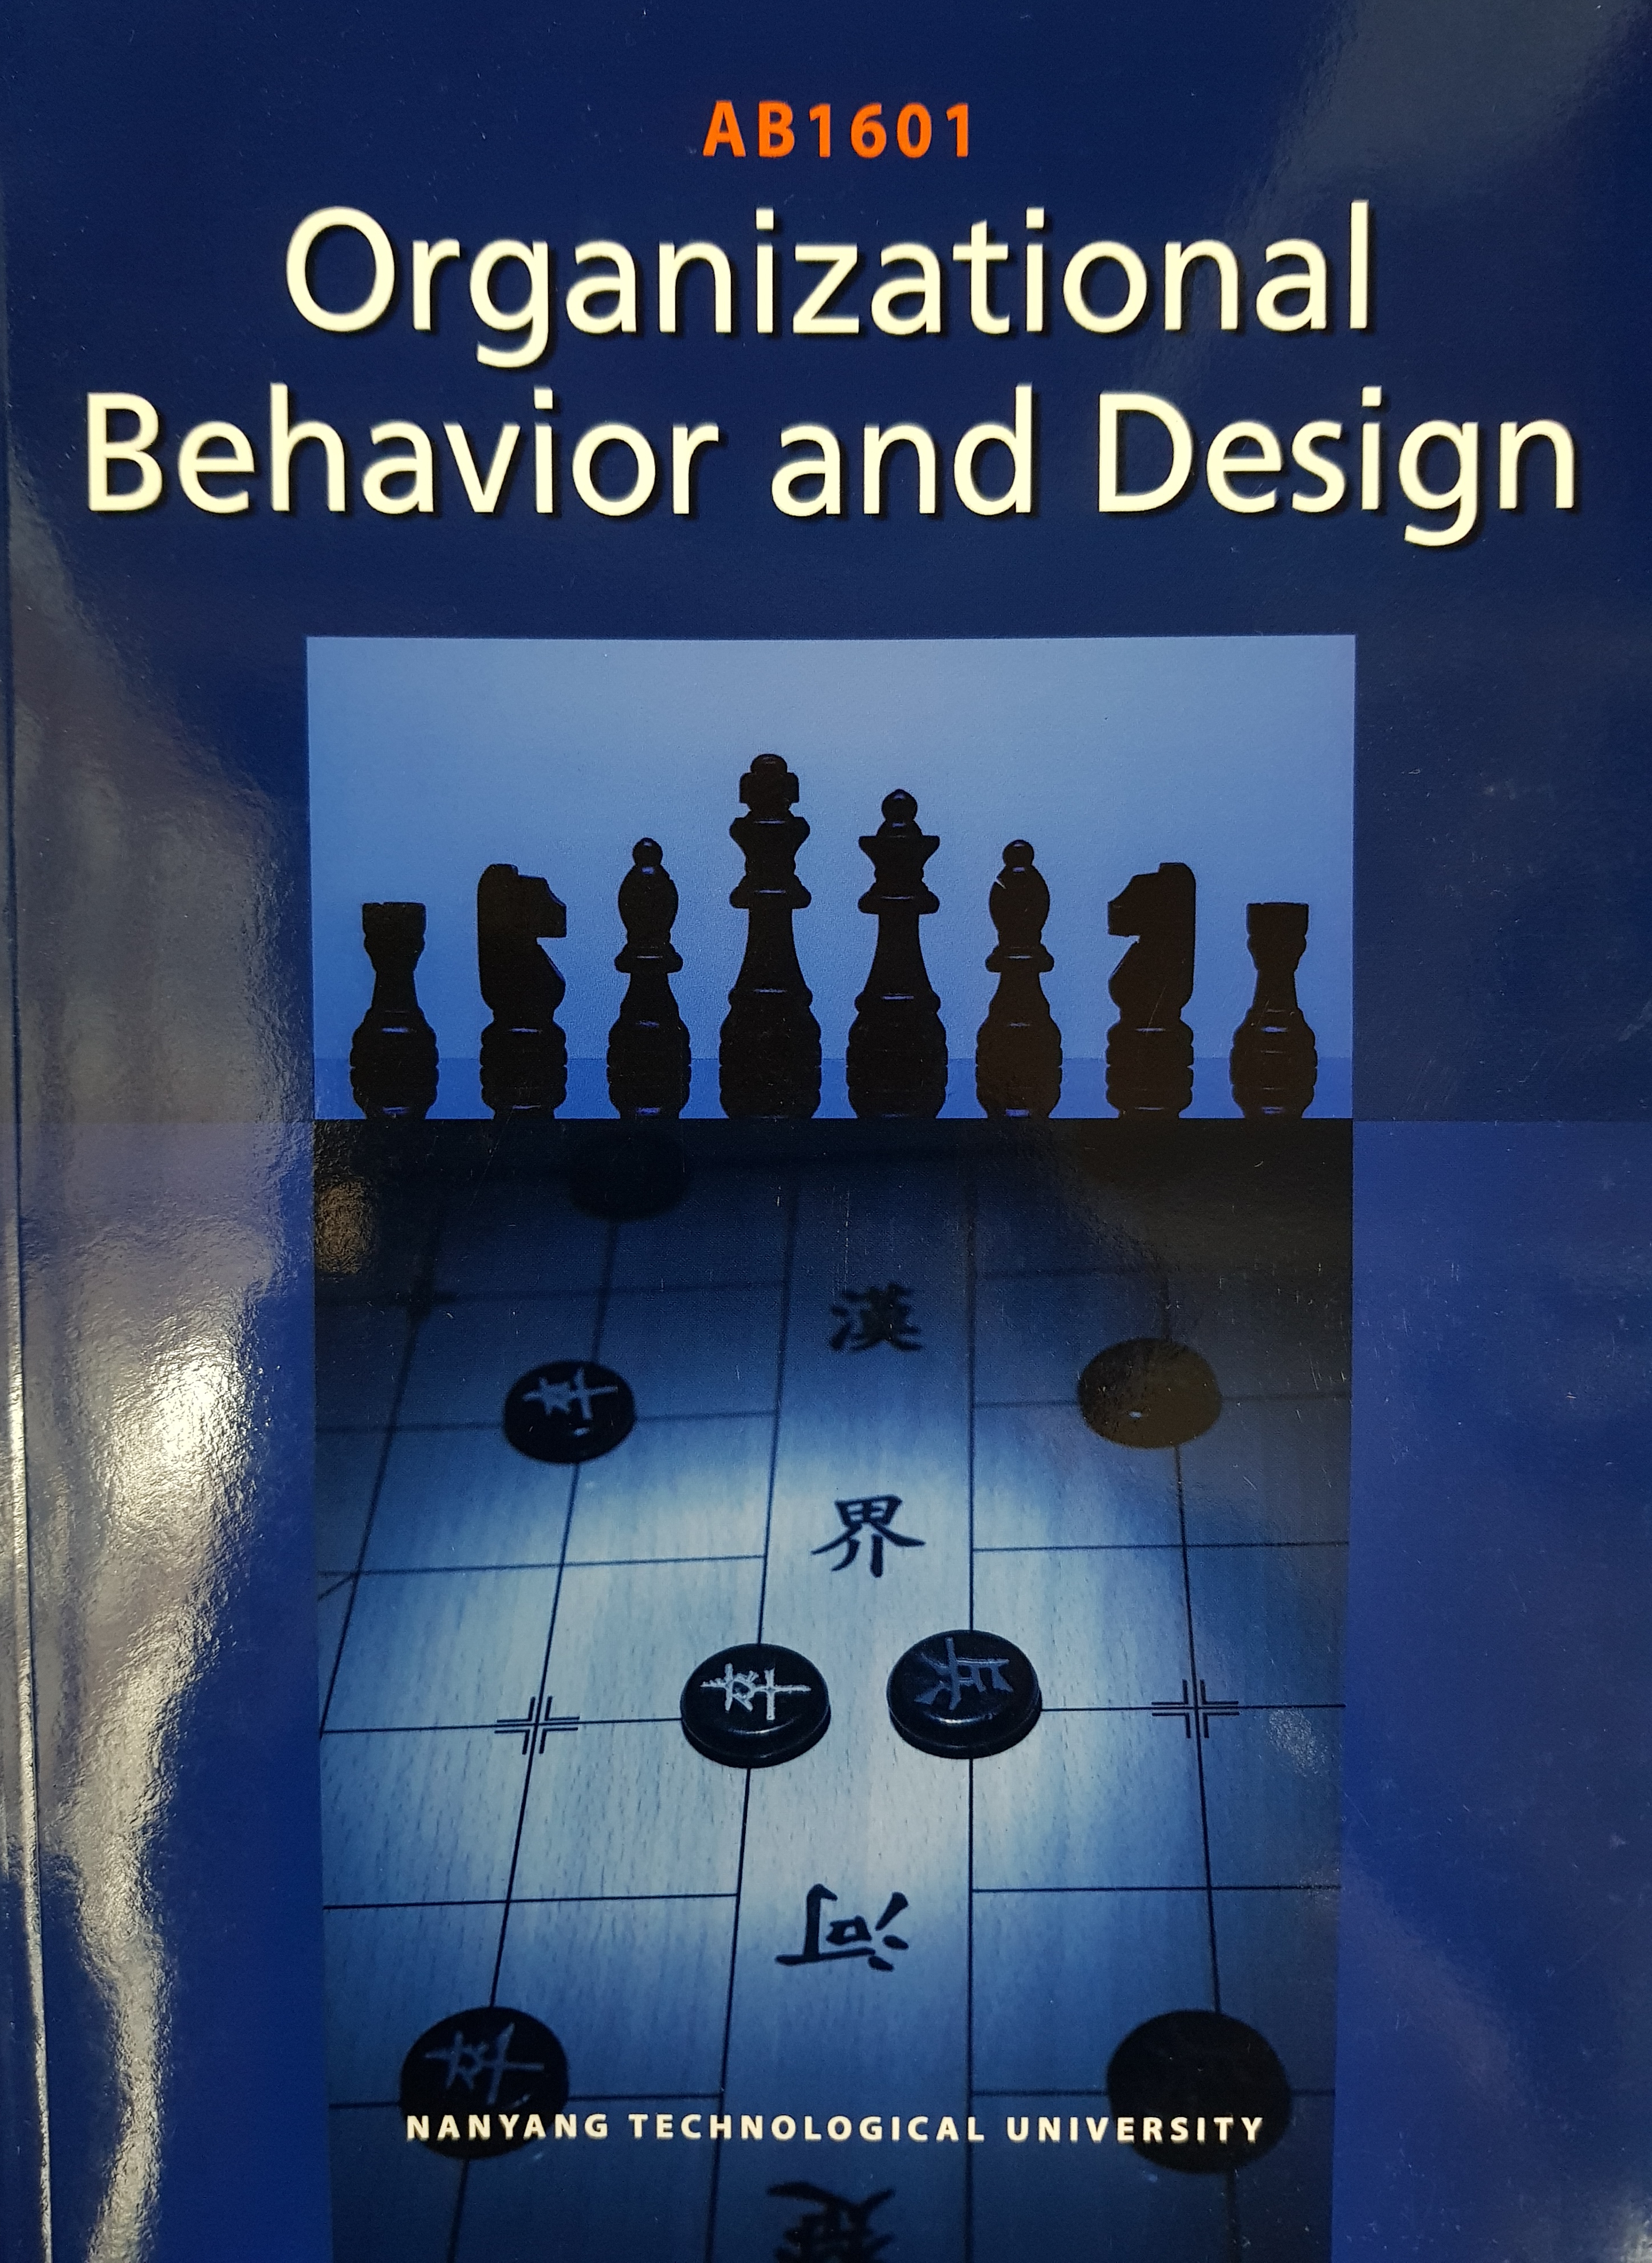 (Organizational Behavior and Design)